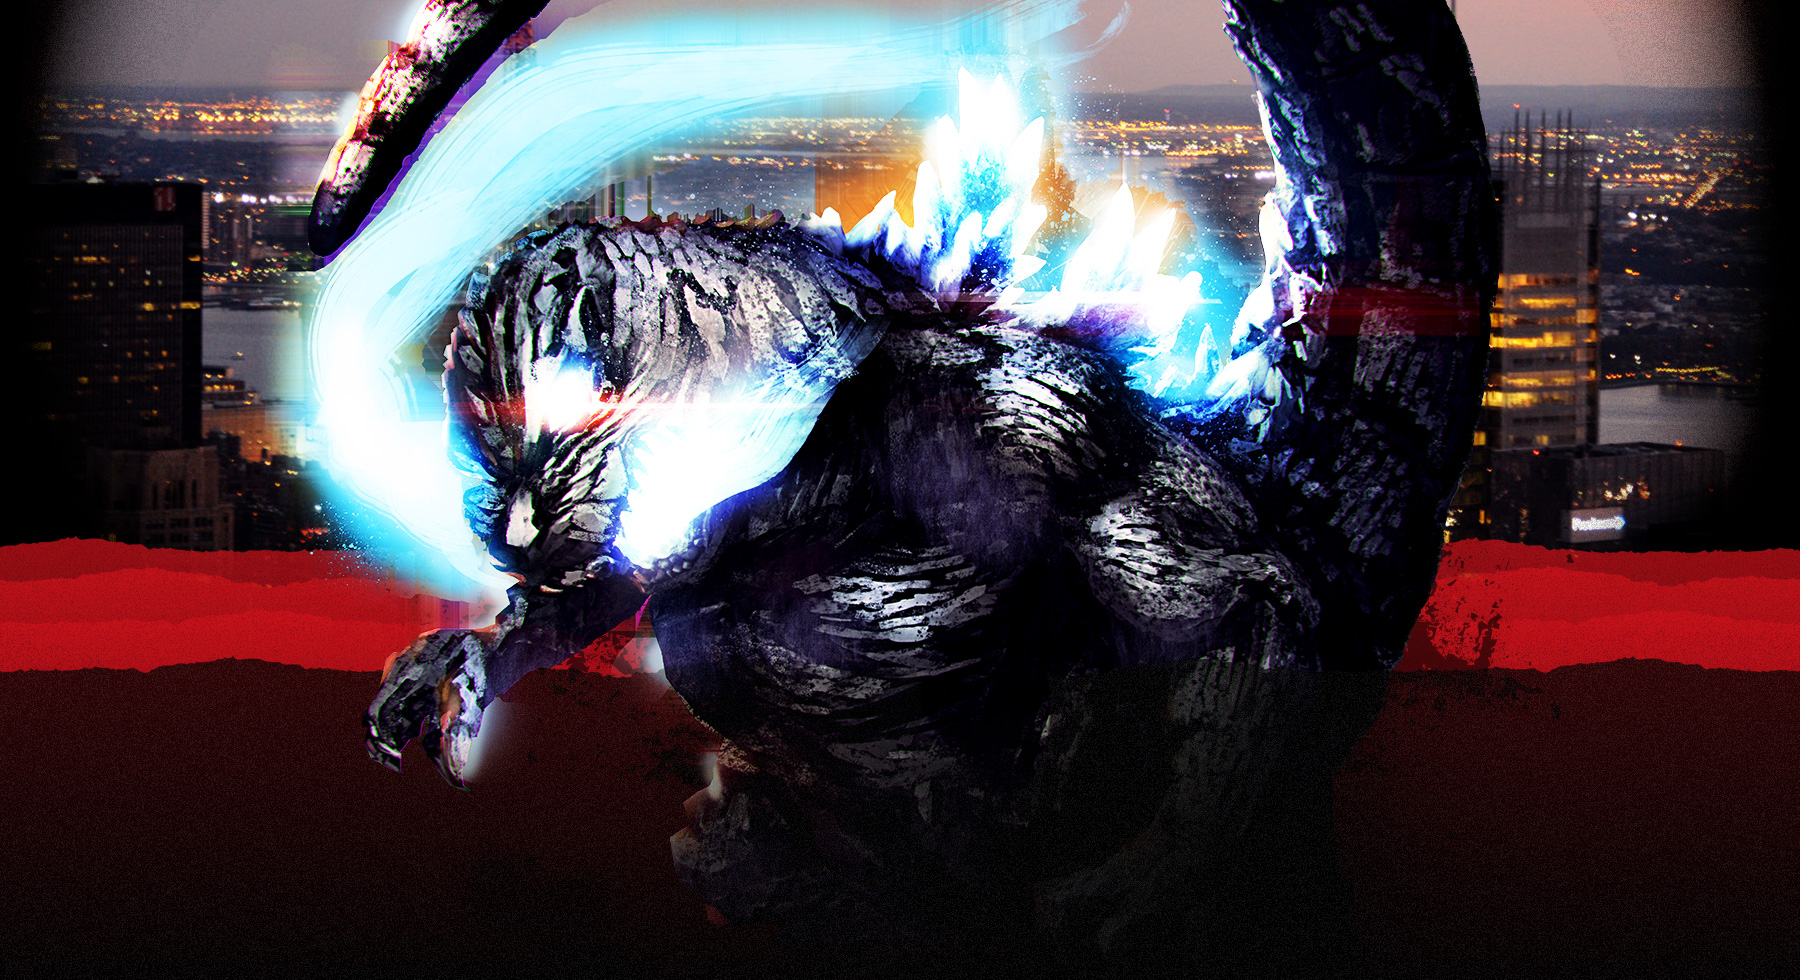 Godzilla PS3 in Japan for PC Wallpaper by godzilla-image on DeviantArt